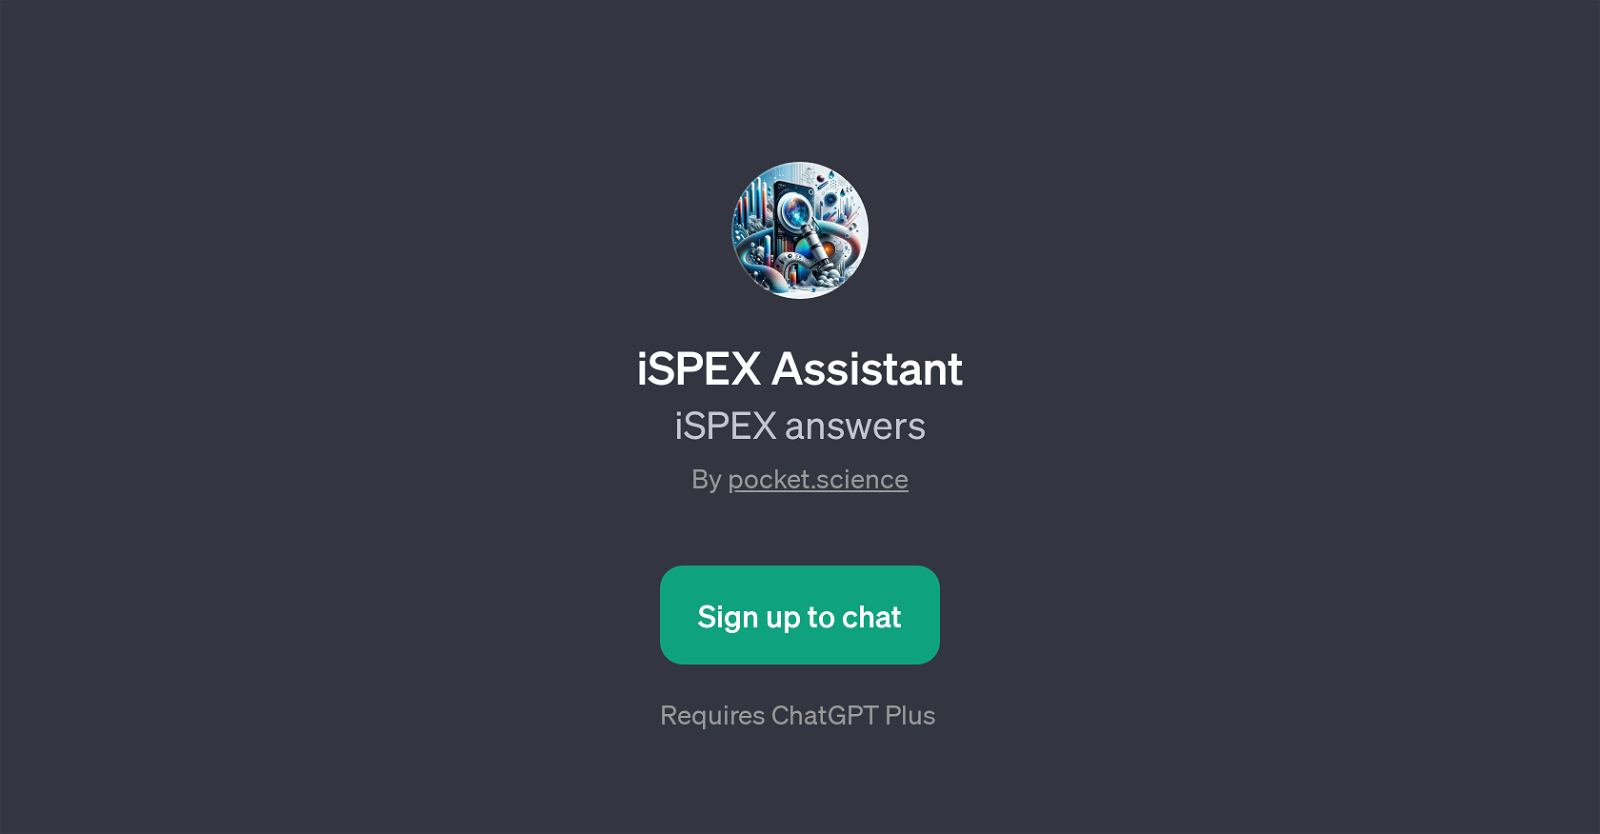 iSPEX Assistant website